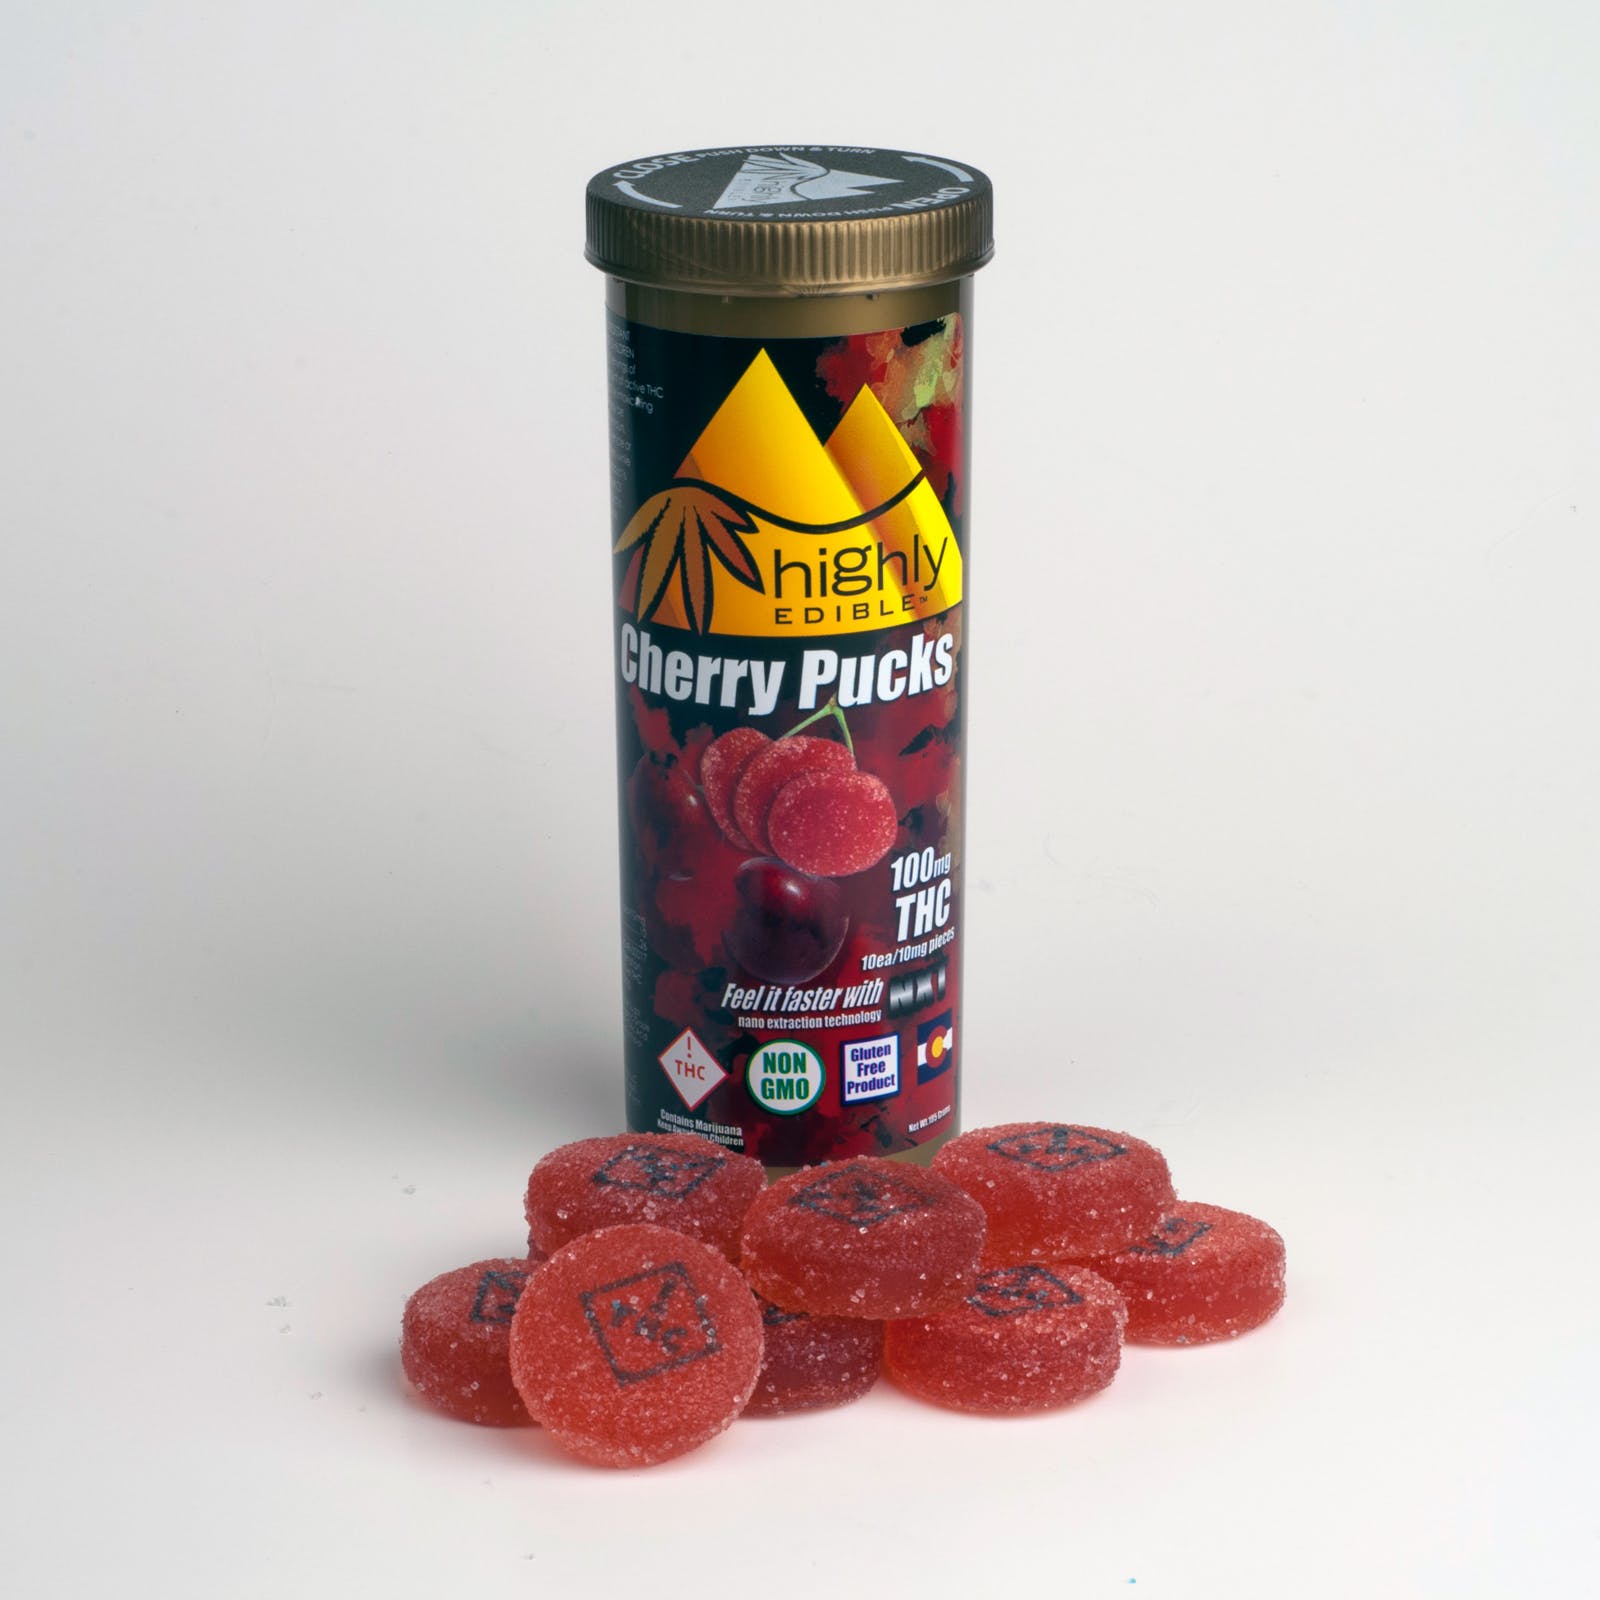 Highly Edible Gummies 250mg- Cherry Pucks (Tax Included)